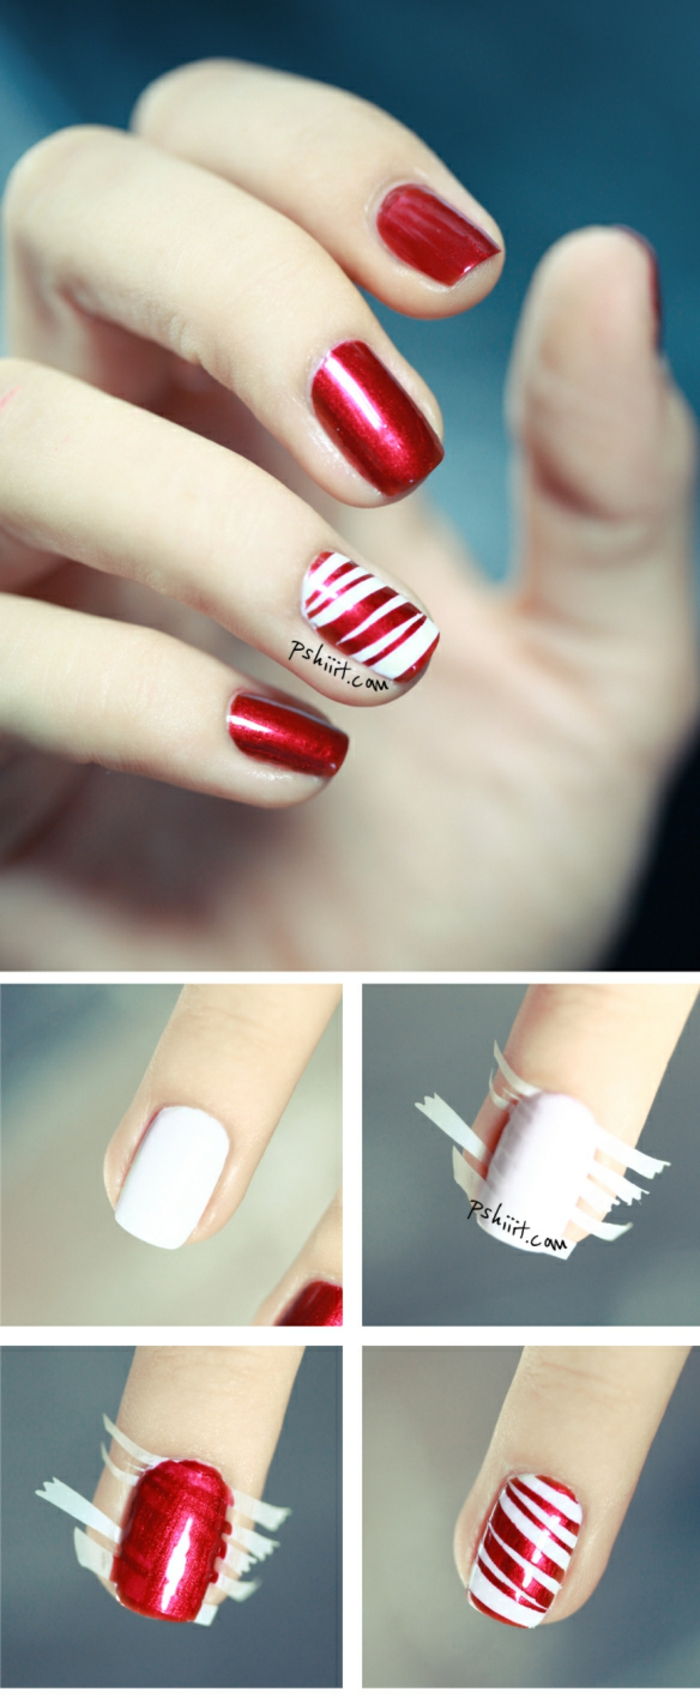 Koel idee voor winterse manicure met tape, witte en rode lijnen, ovale nagelvorm